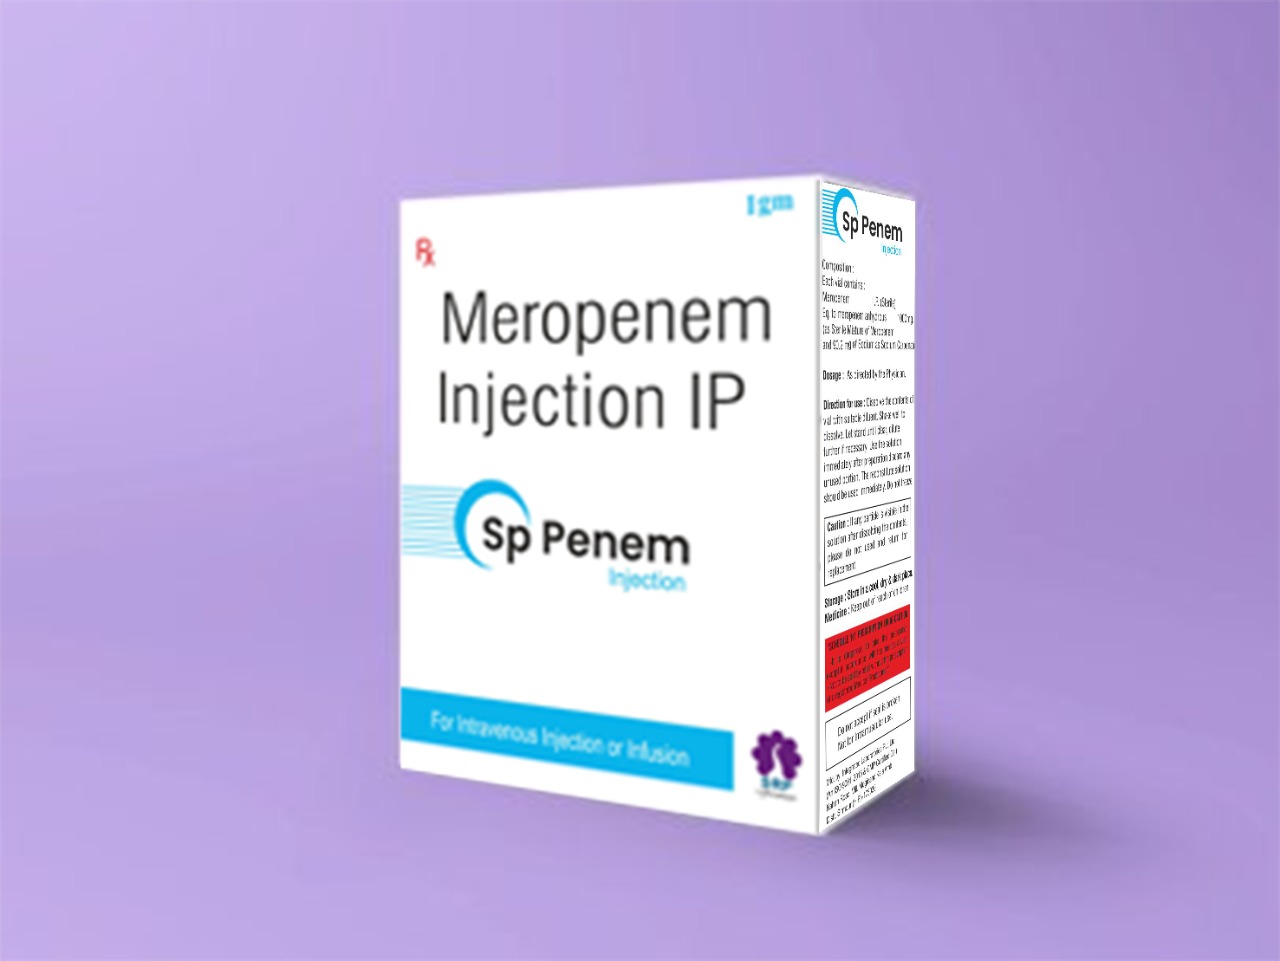 Product Name: sp penem , Compositions of meropenem injecton are meropenem injecton - Cynak Healthcare